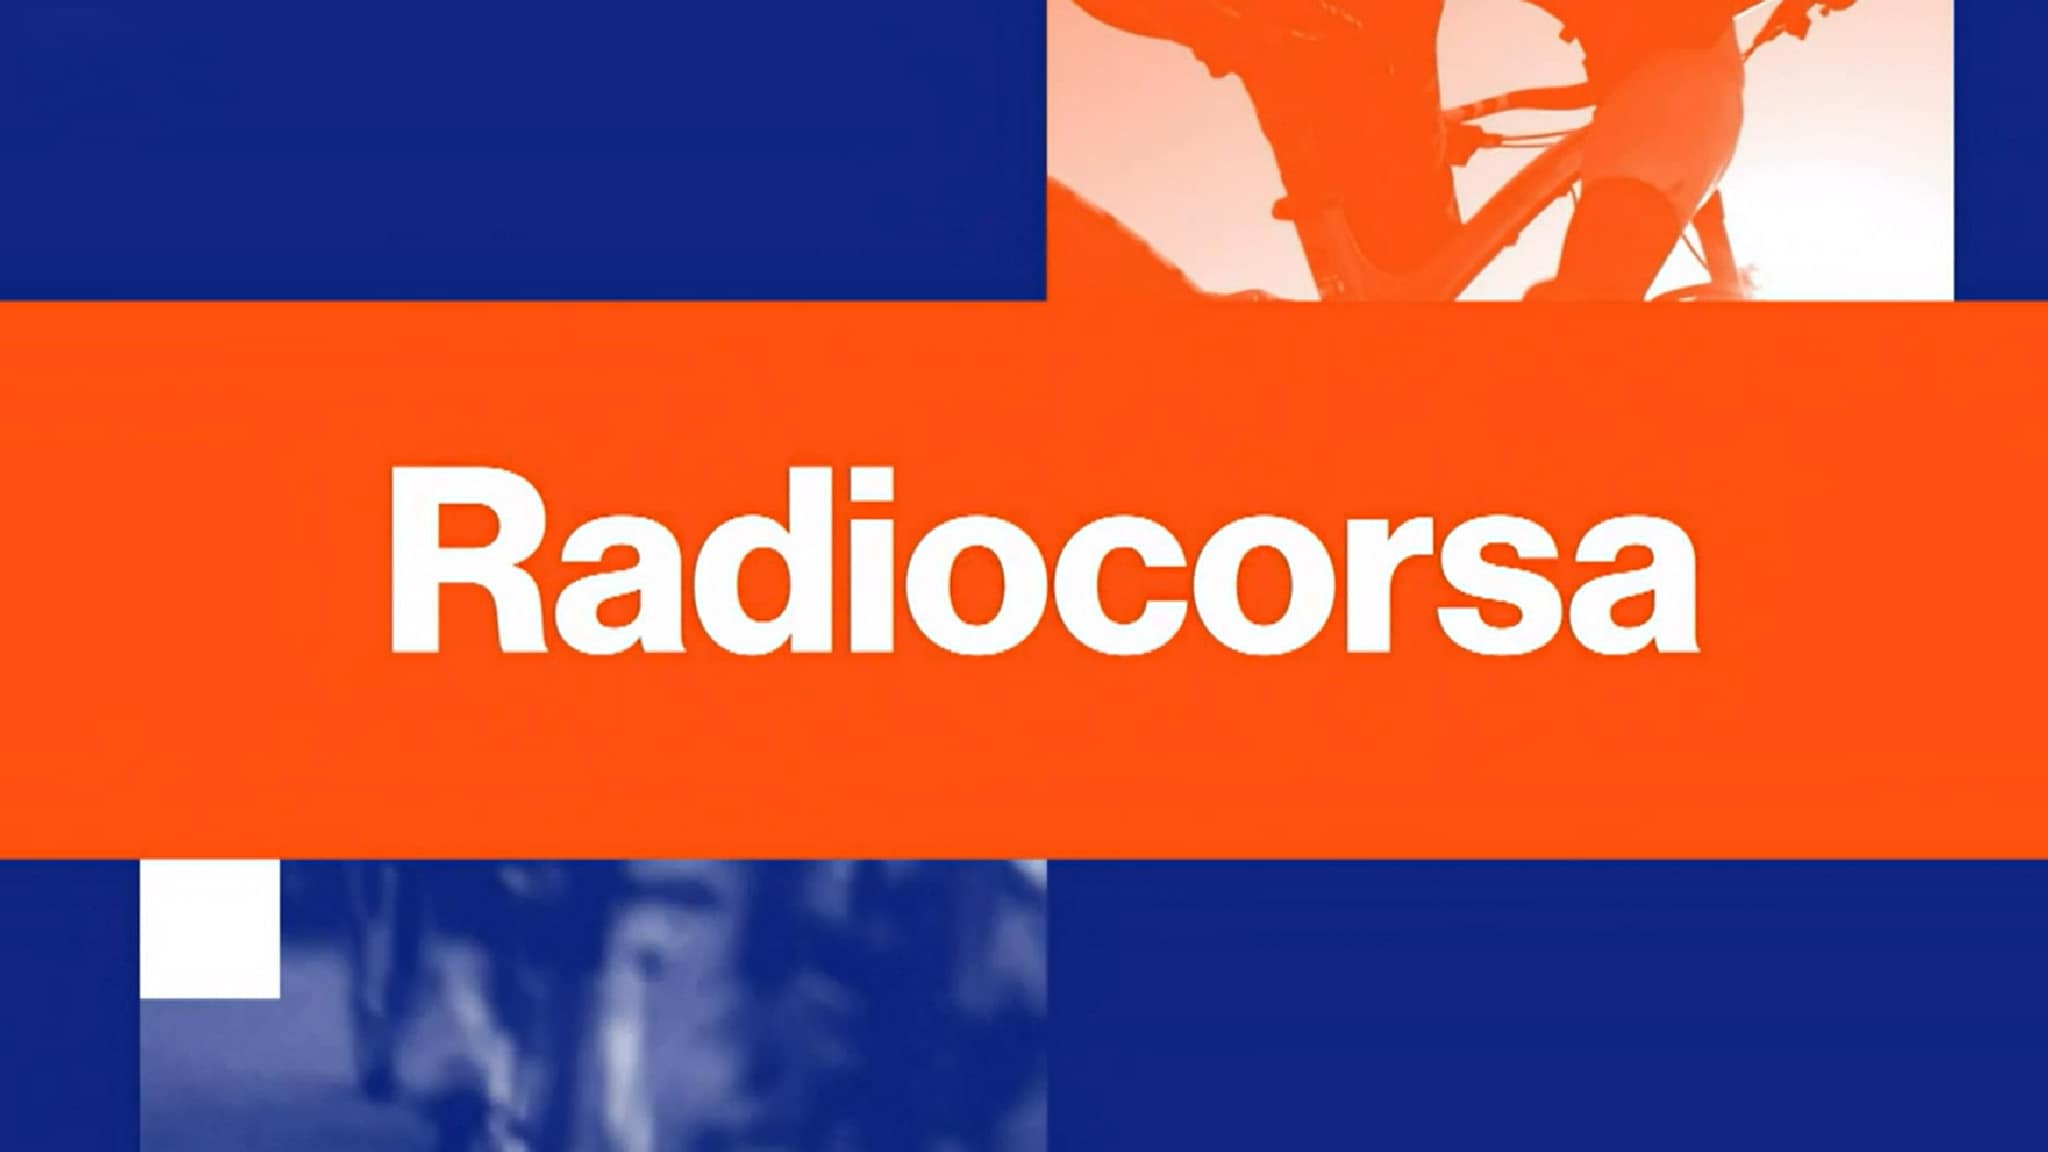 Radiocorsa